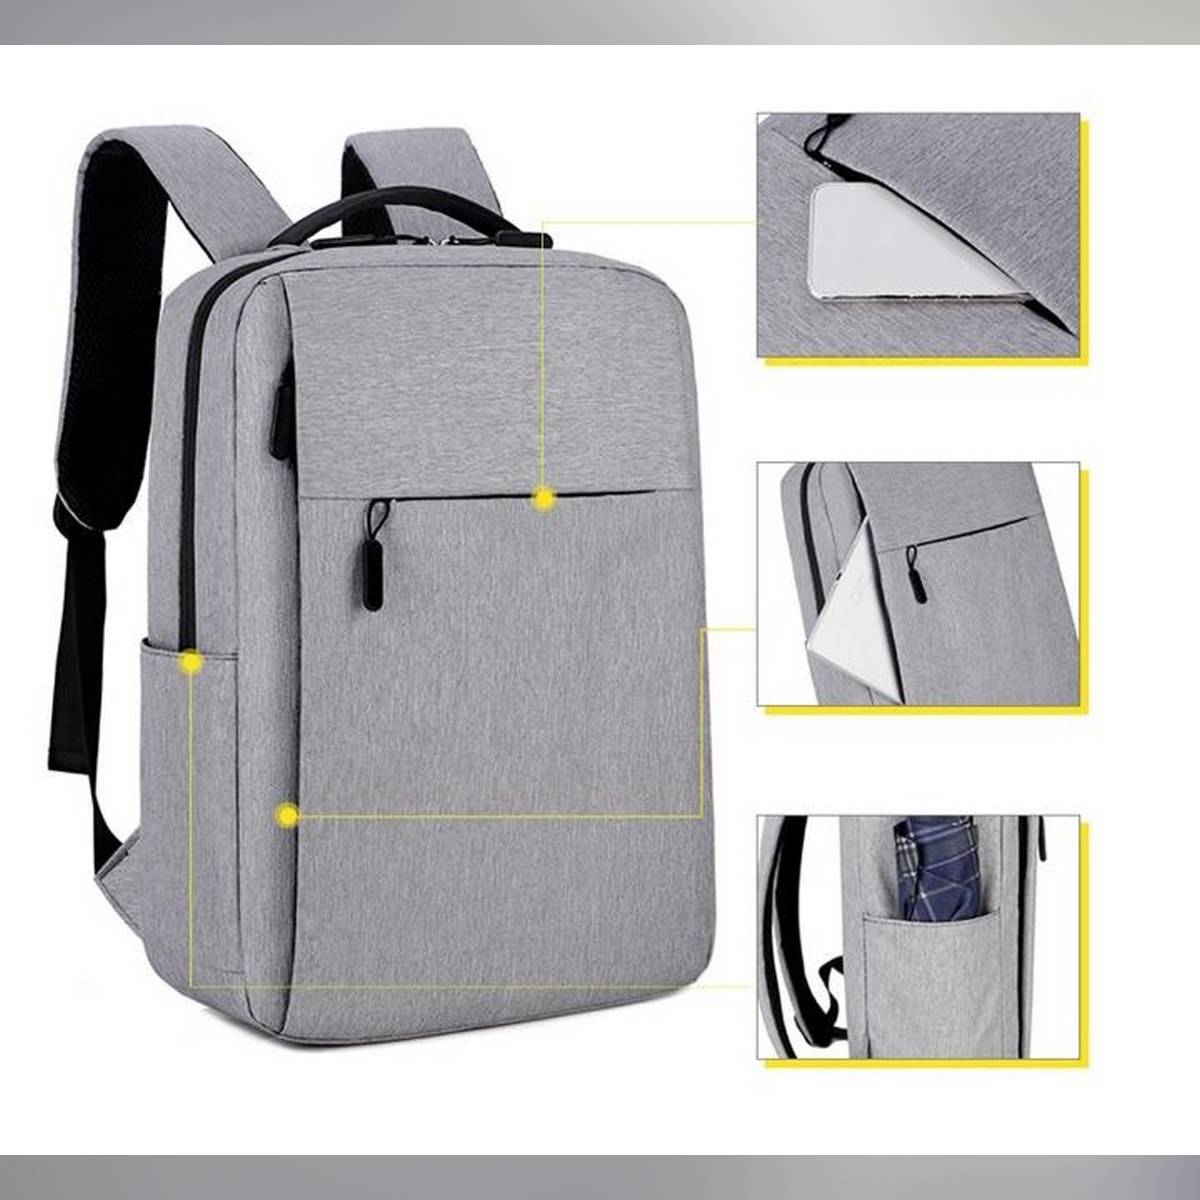 Usb Bag-pack For Boy School, College, University Bag Price in Pakistan ...